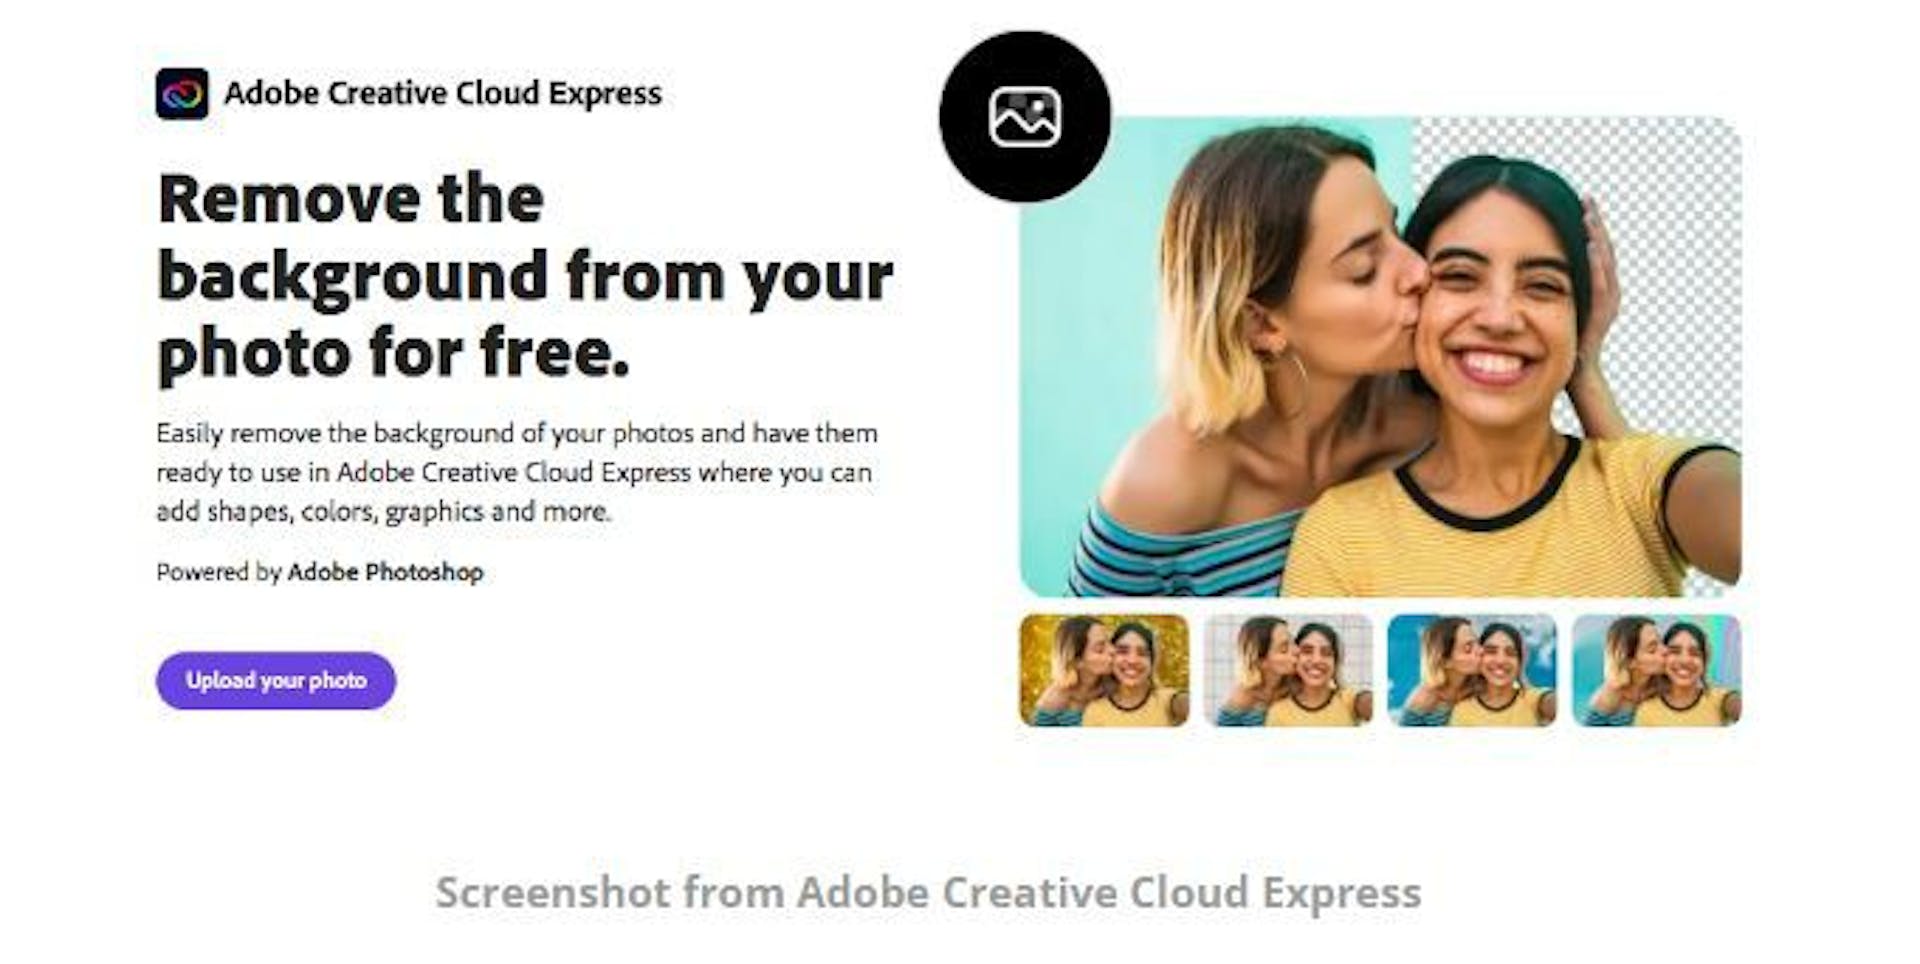 Adobe Creative Cloud Express 产品页面结构清晰